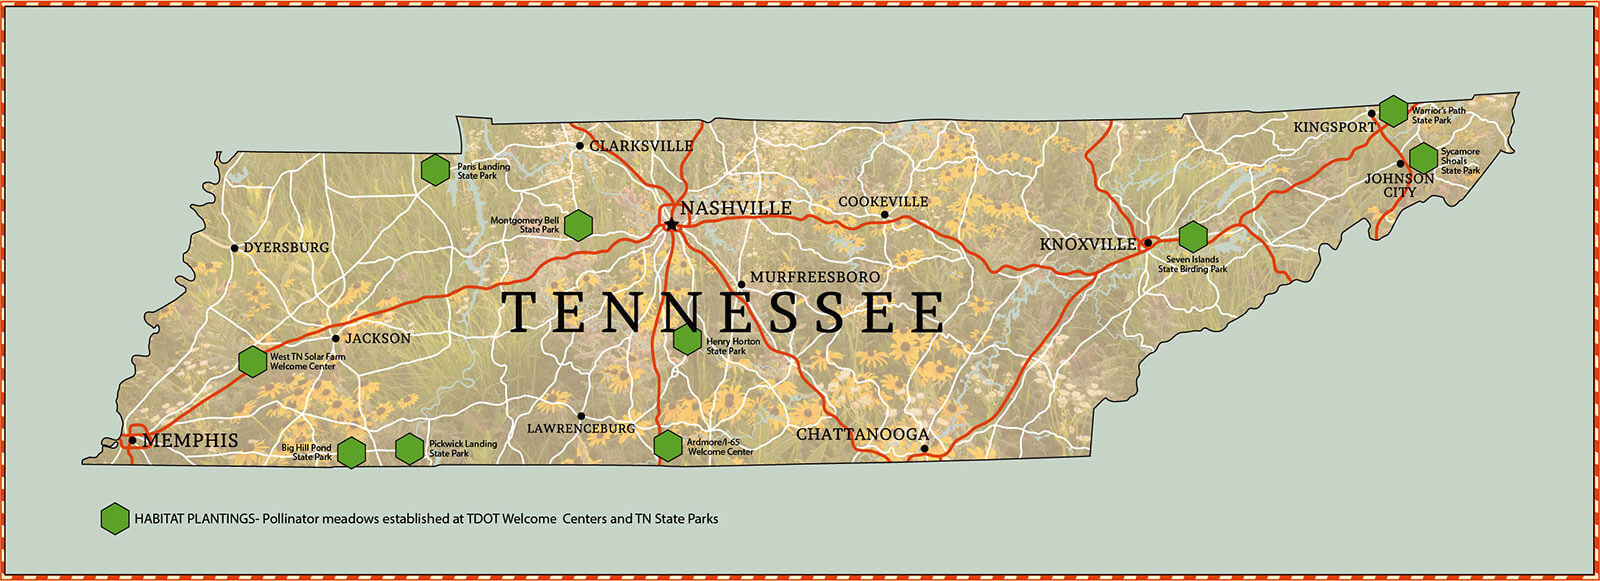 Tennessee Department of Transportation's Partners for Pollinators Habitat Program